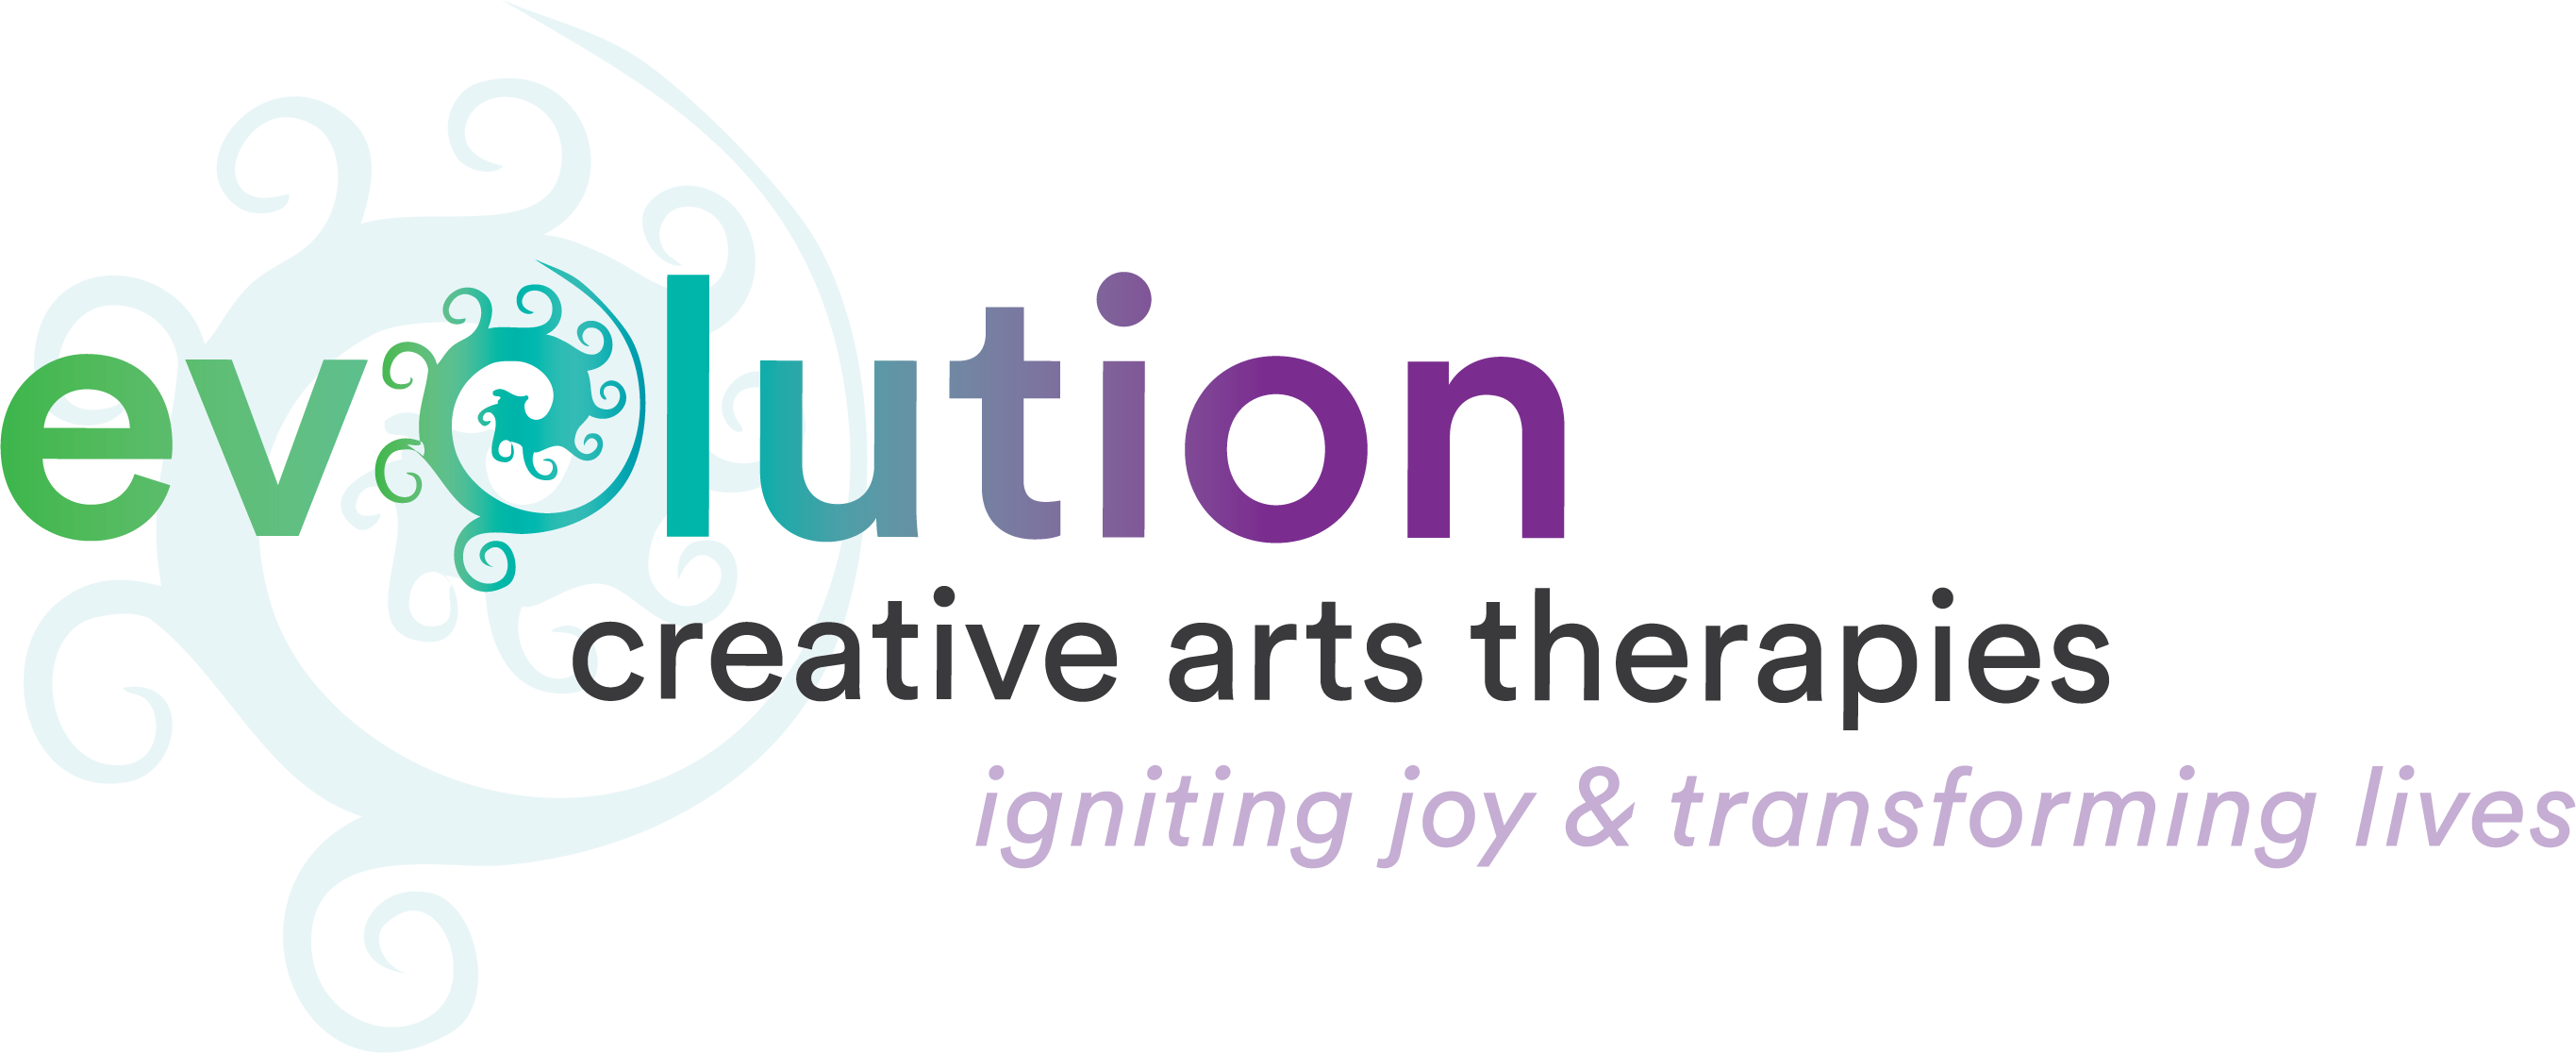 Evolution Creative Arts Therapies | Arts Therapy Melbourne